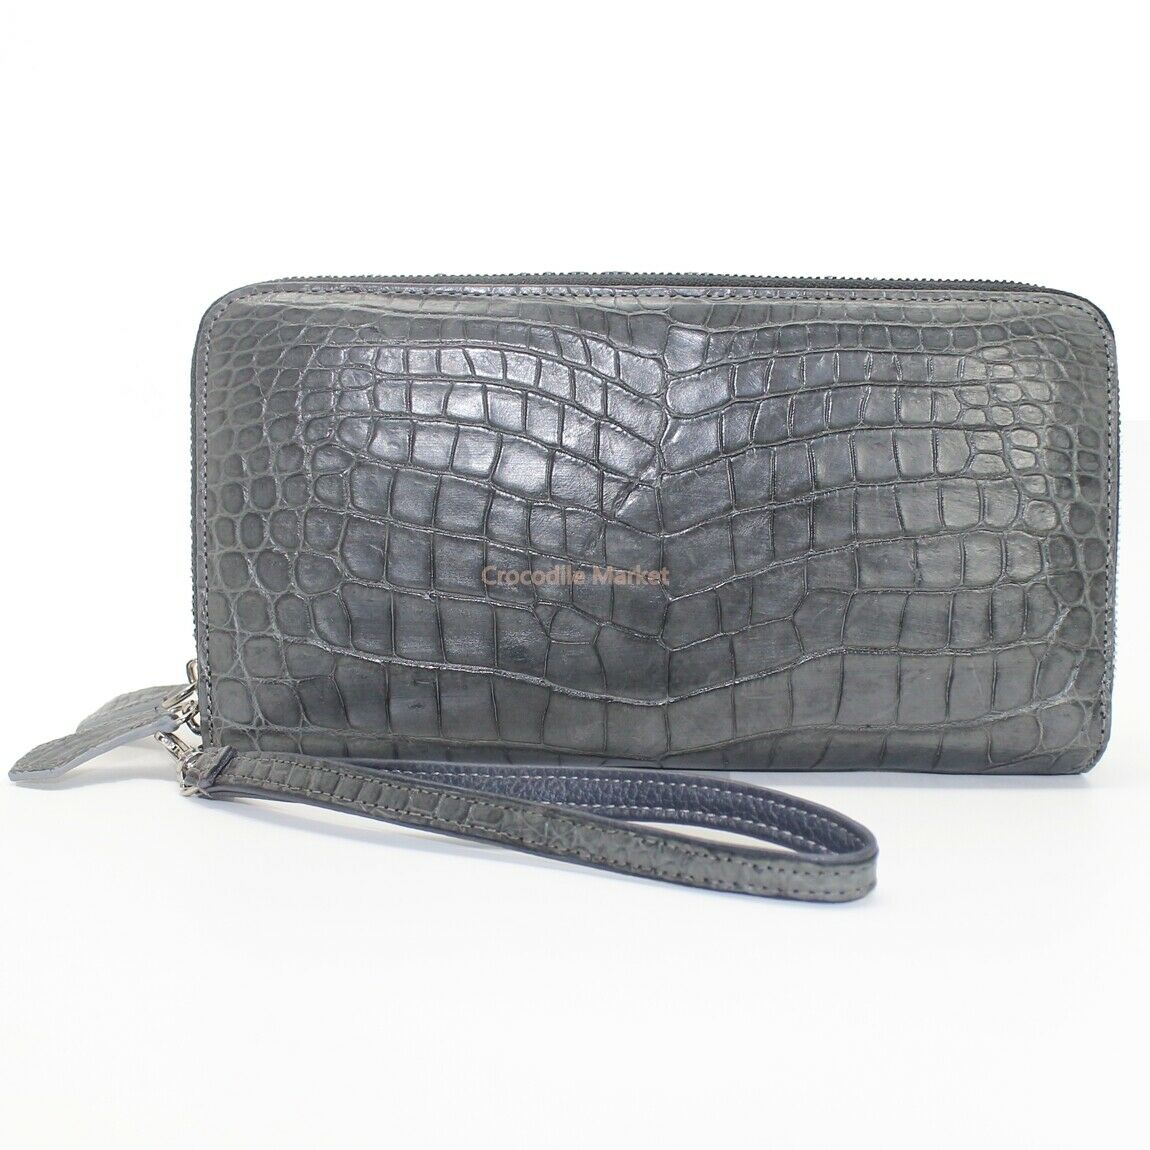 Genuine Leather Handbag for Women Crocodile Print at Rs 1600 | Women Leather  Handbags in Kolkata | ID: 21862424633